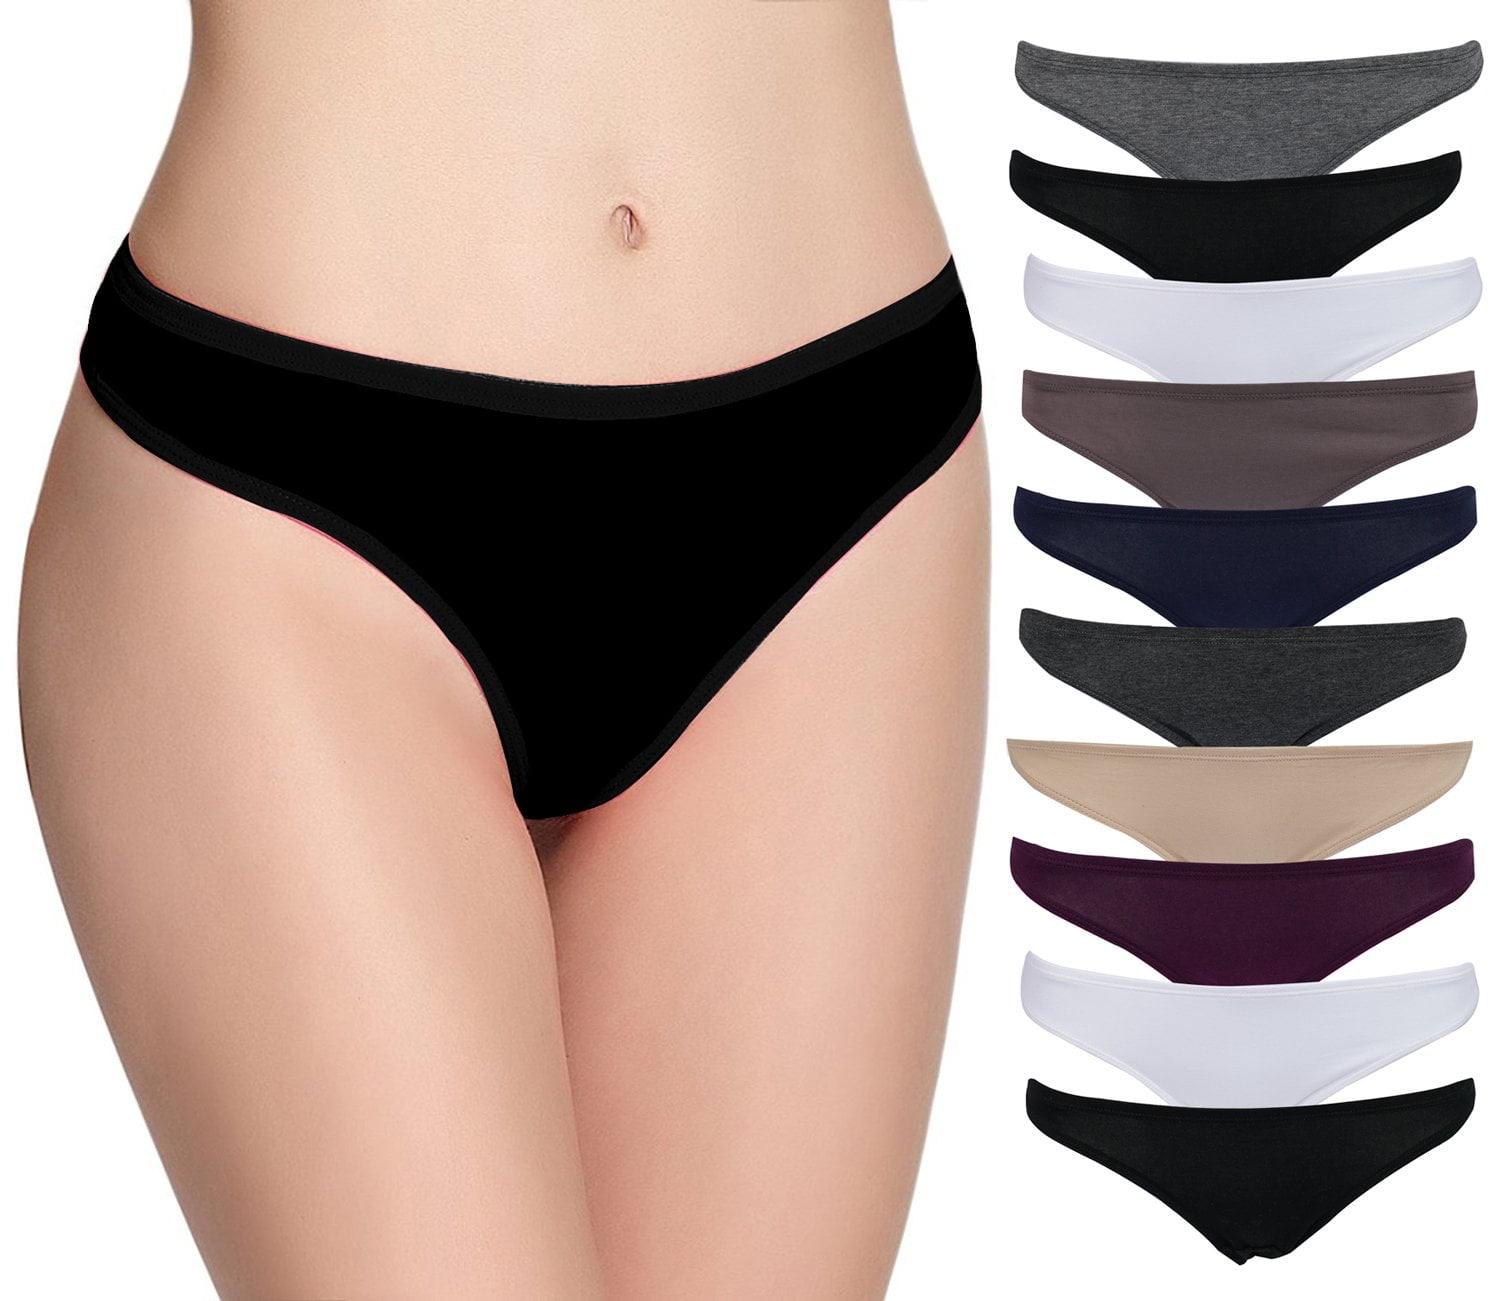 Emprella Womens Underwear Thong Panties - 10 Pack Colors and Patterns May  Vary 